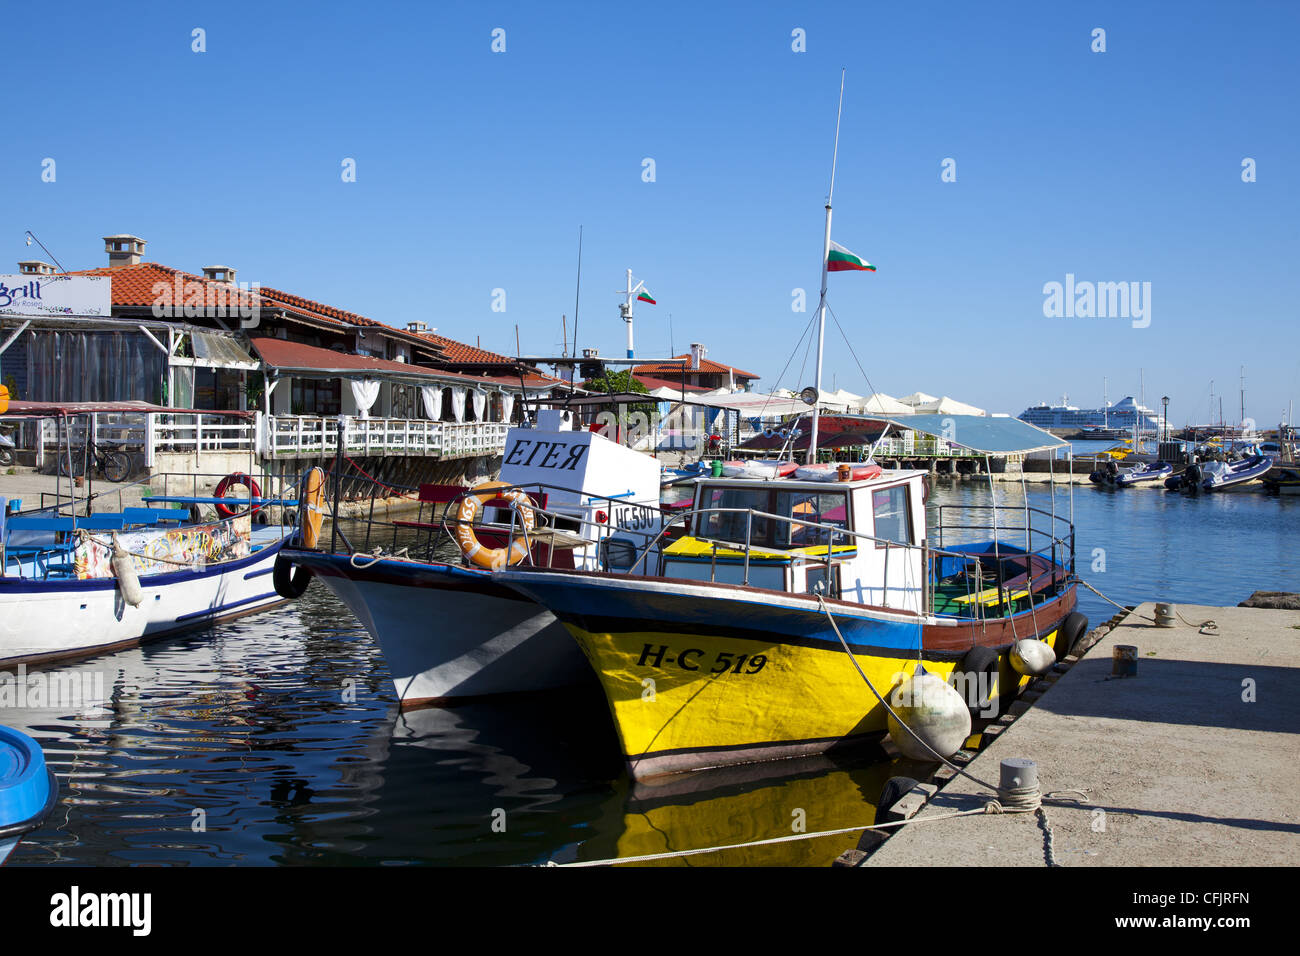 Boats and restaurants along the harbour quay, Nessebar, Black Sea, Bulgaria, Europe Stock Photo